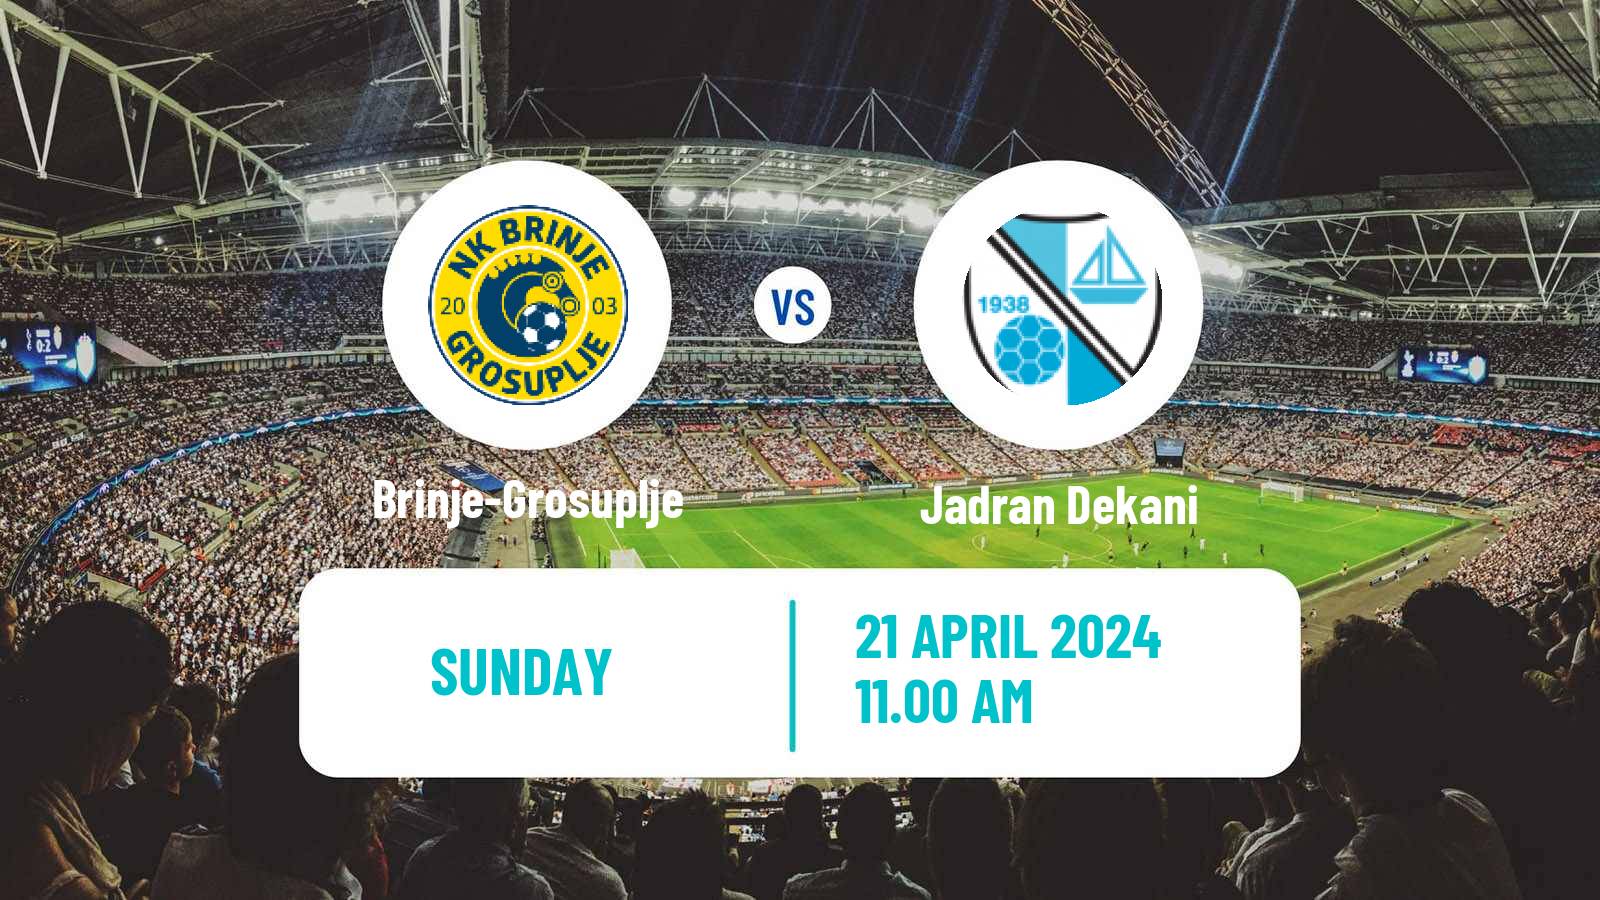 Soccer Slovenian 2 SNL Brinje-Grosuplje - Jadran Dekani